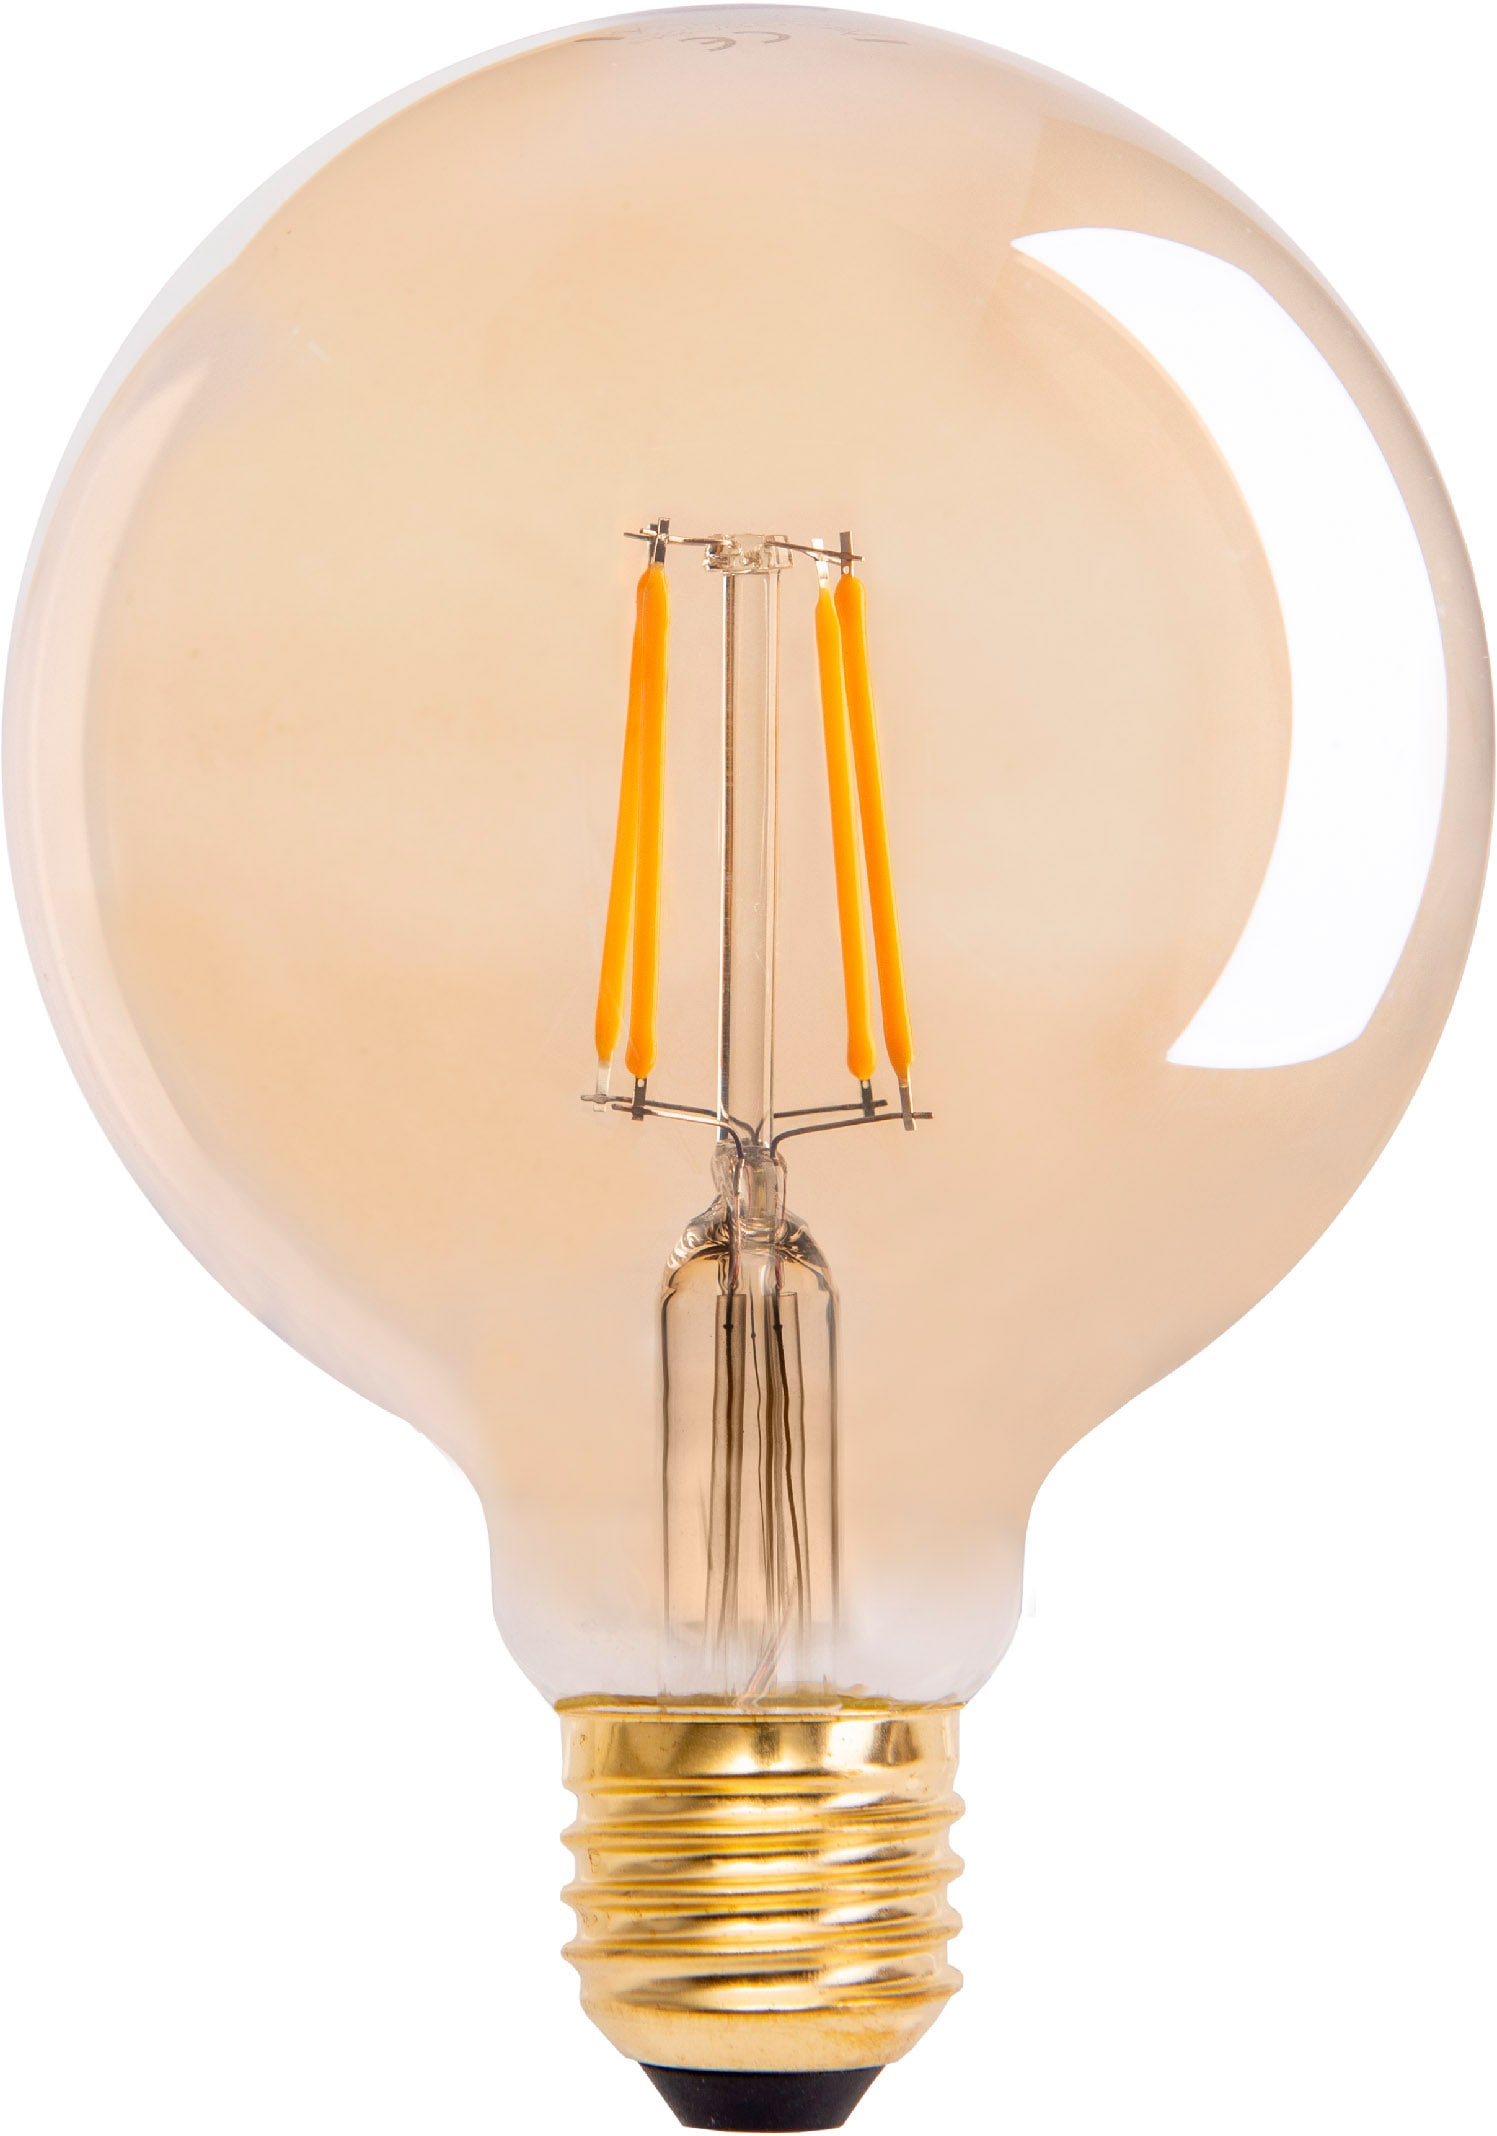 näve LED-Leuchtmittel »Dilly«, E27, 3 St., Warmweiß, Set of 3 LED bulbs, E27/4.1W "Dilly" Reto Kugel, Deko Globlampe